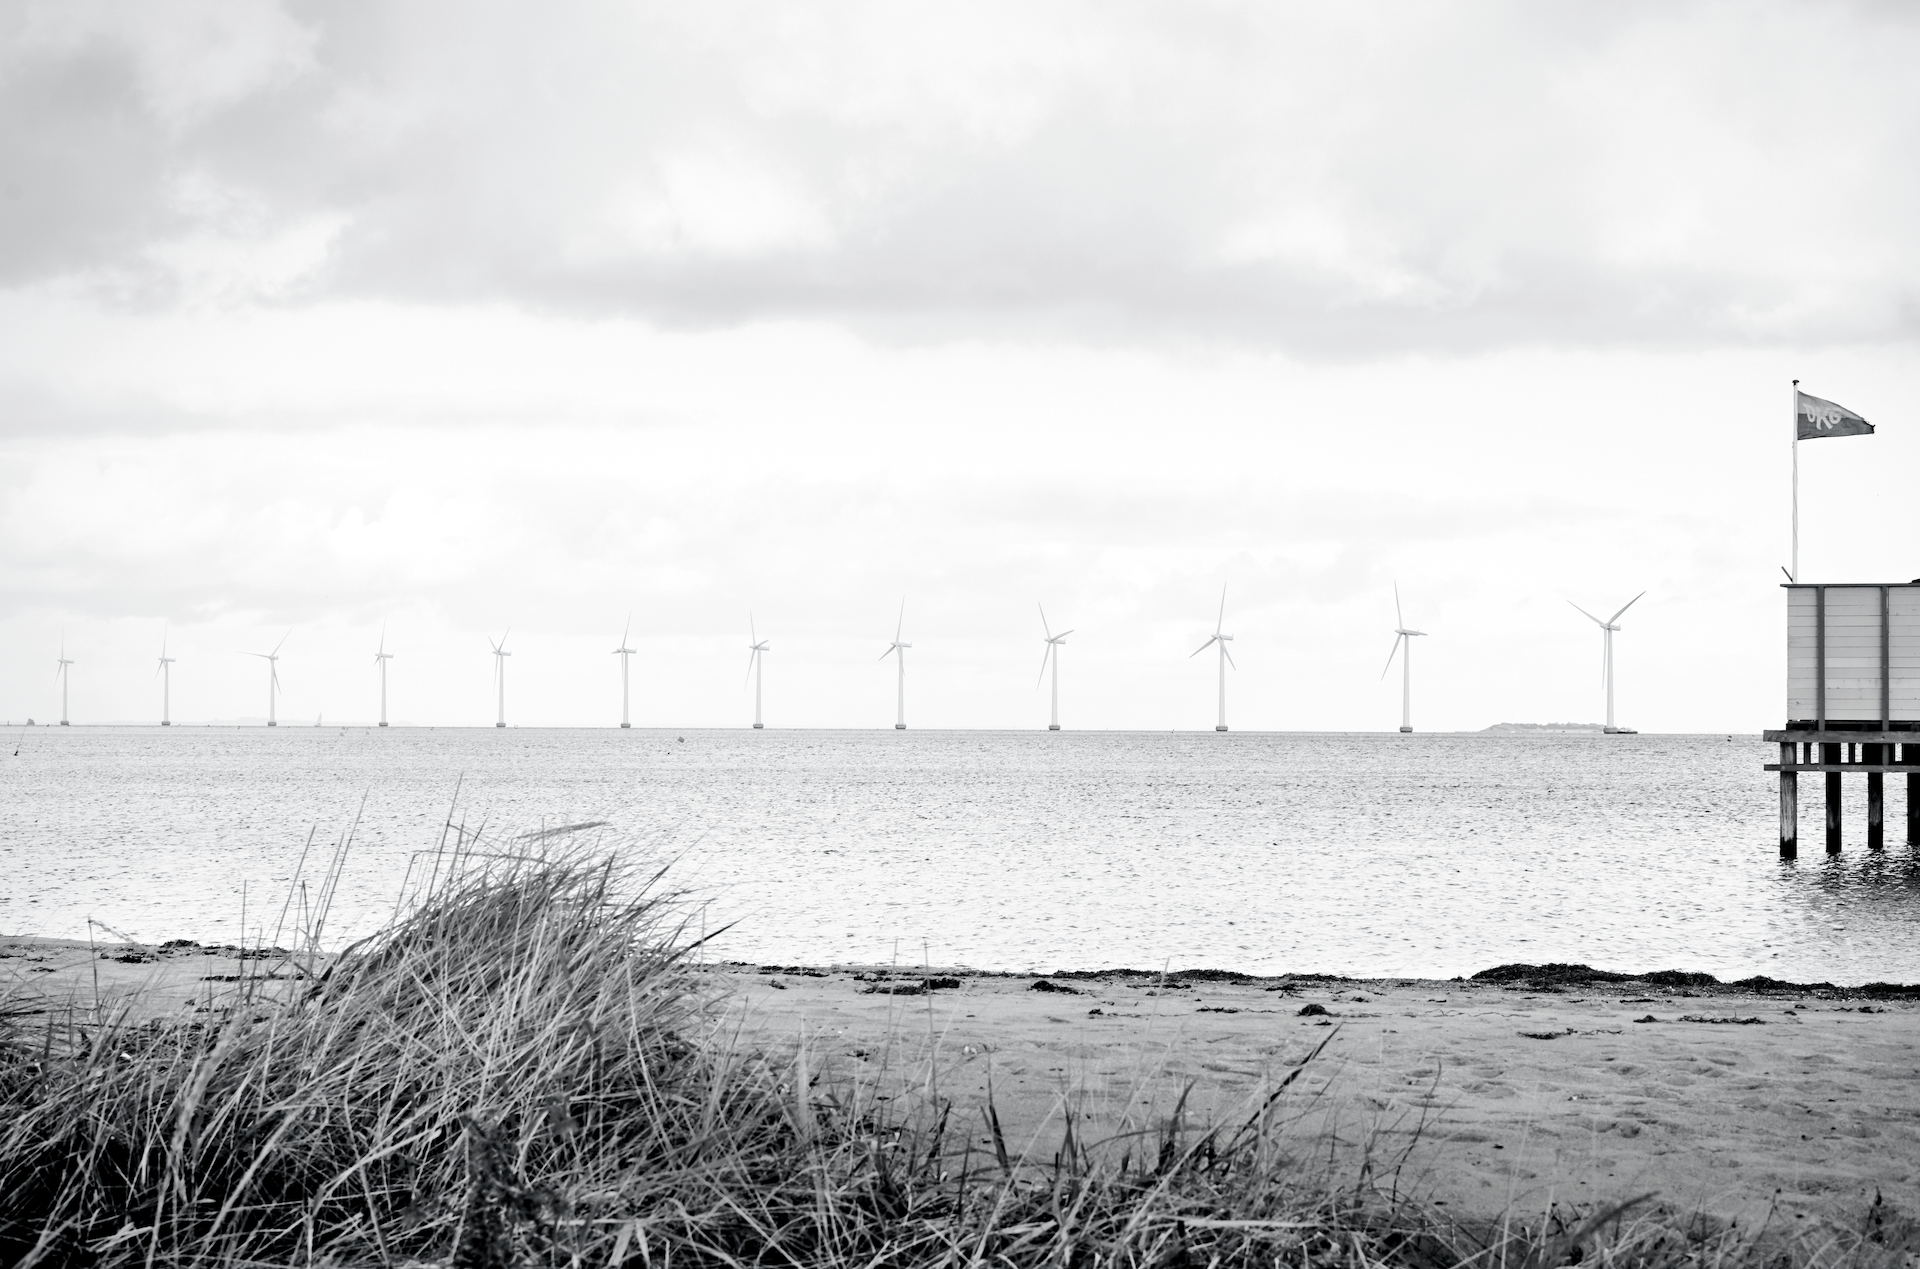 Črno bela slika obale. Peščena plaža, v ozadju vetrnice za pridobivanje elektrike.